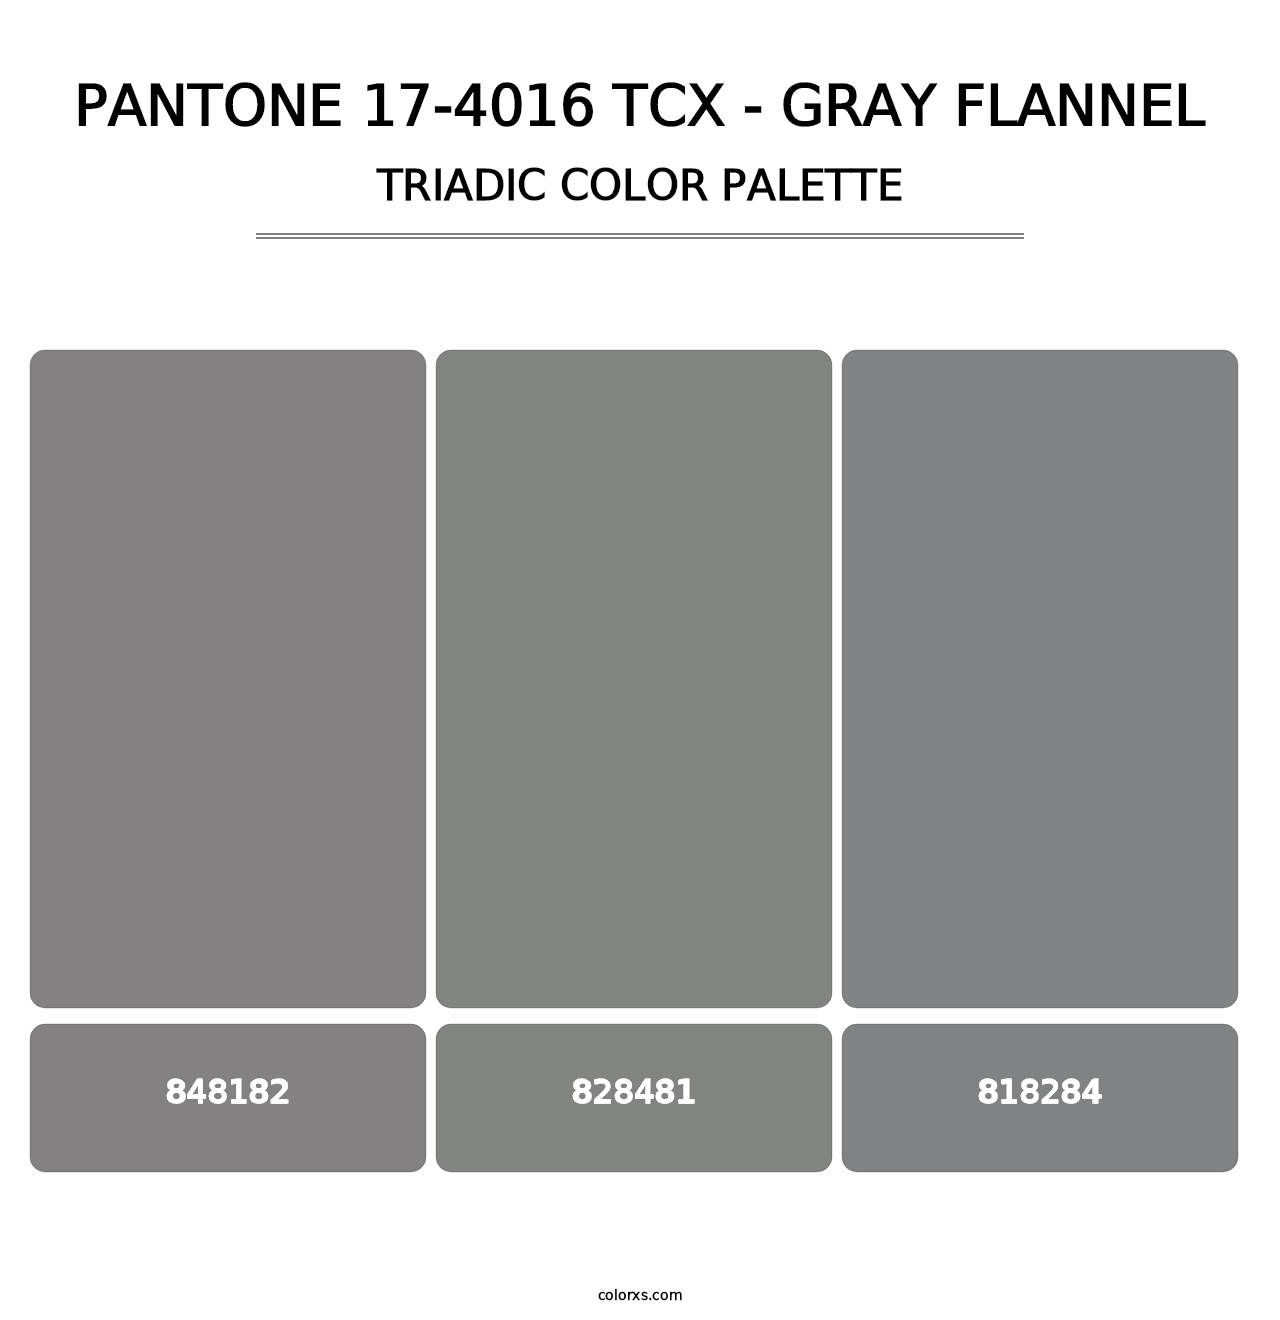 PANTONE 17-4016 TCX - Gray Flannel - Triadic Color Palette